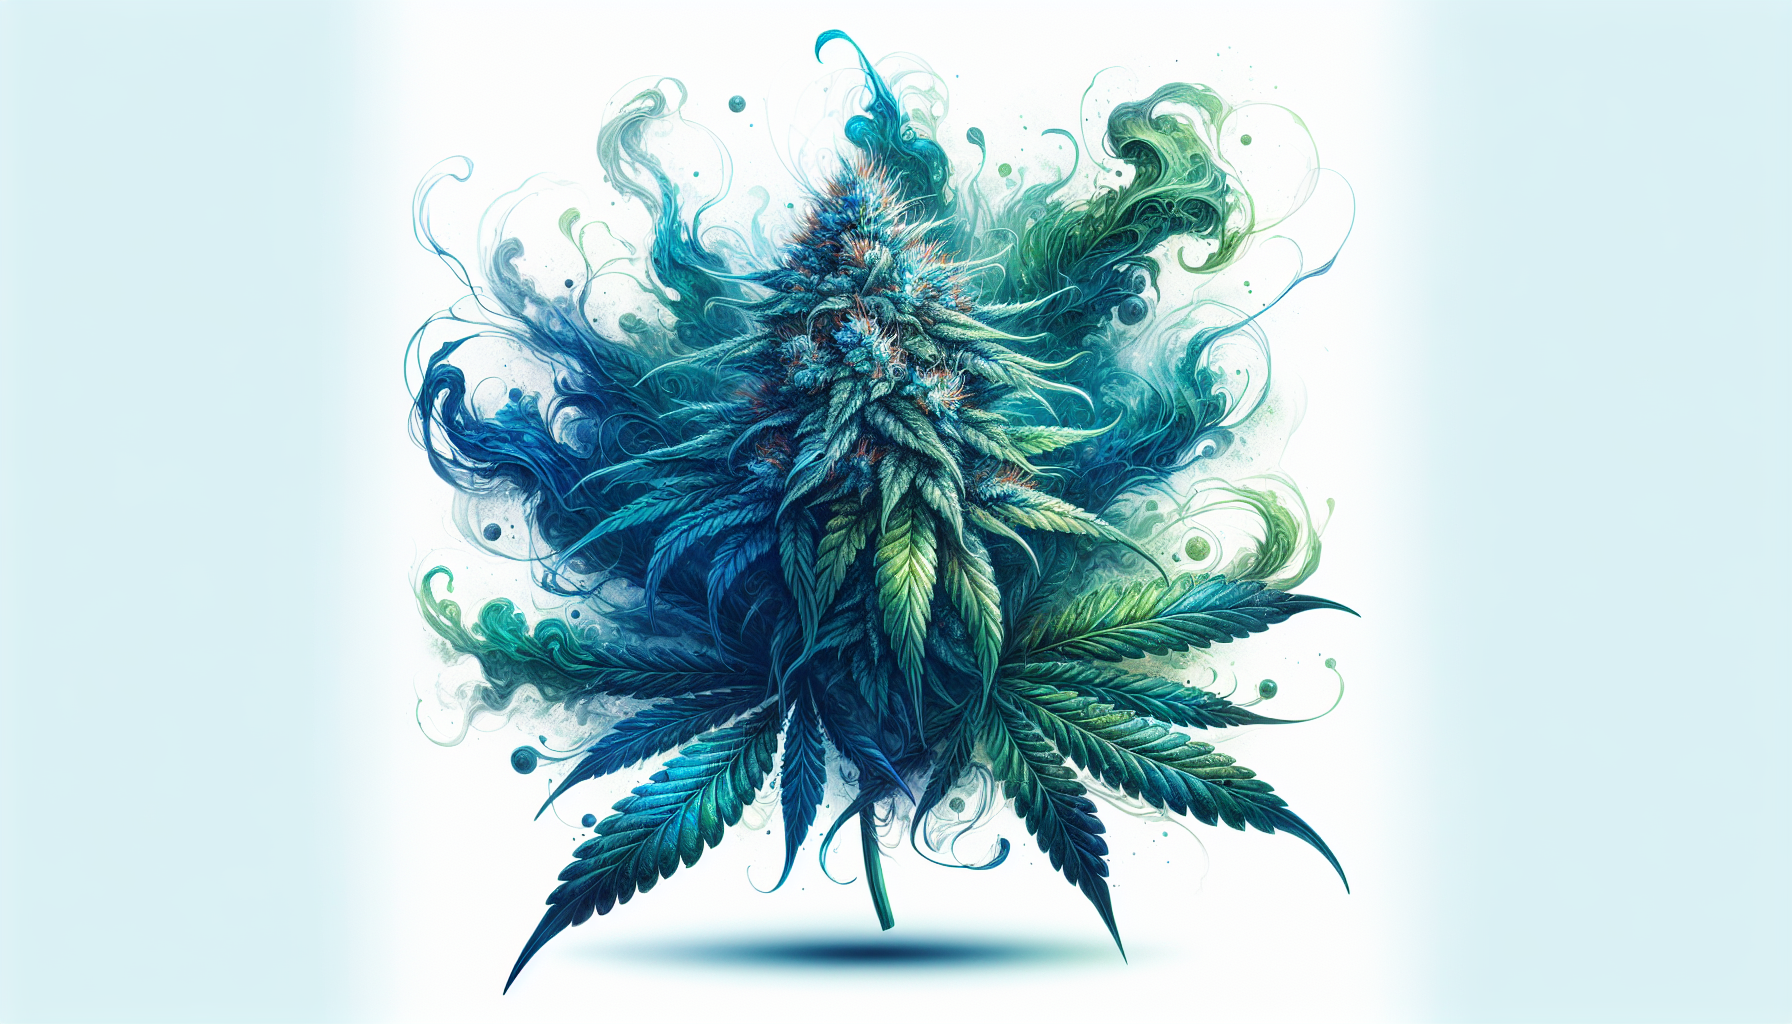 Artistic representation of Blue Dream cannabis strain